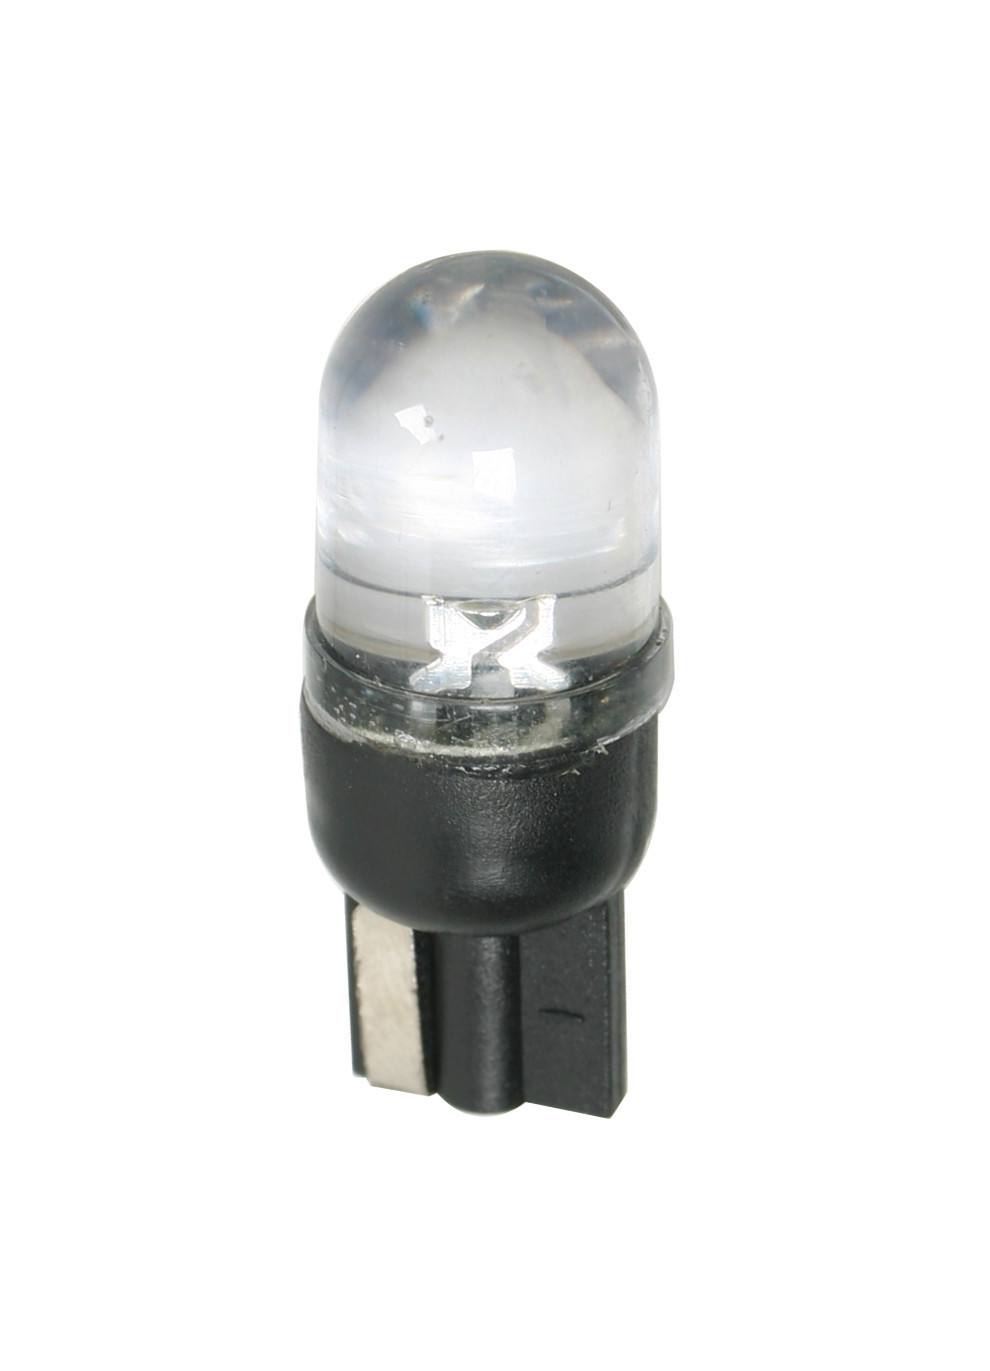 24V Micro lamp 1 Led - (W5W) - W2,1x9,5d - 2 pcs - Red thumb